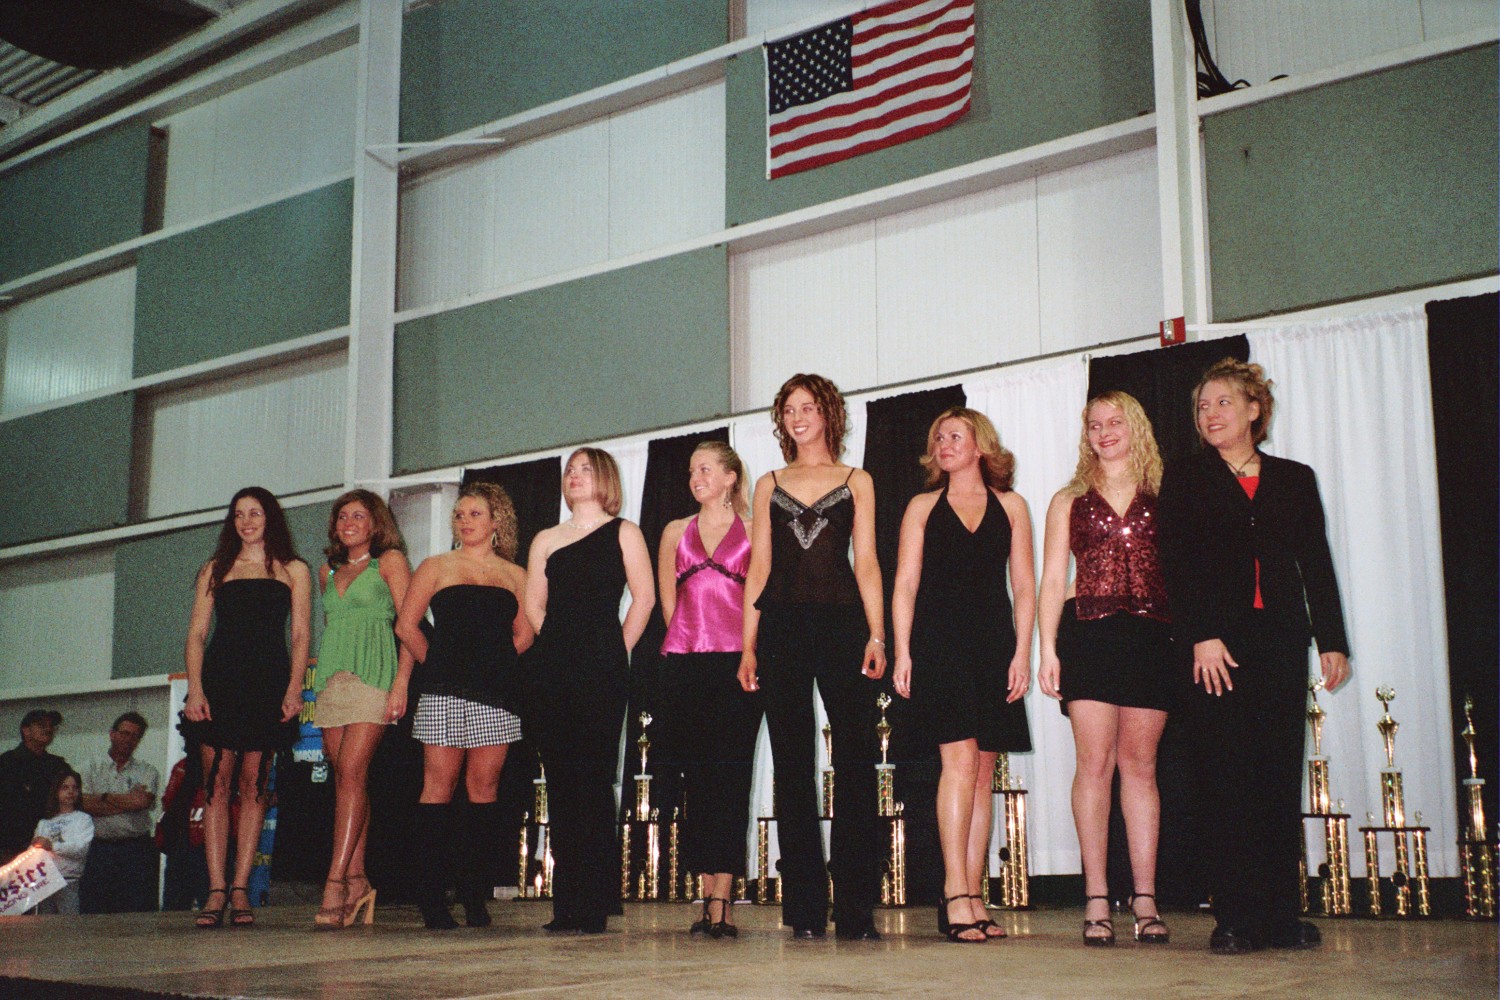 2005 Ms. Dirt Trackin' Contestants
